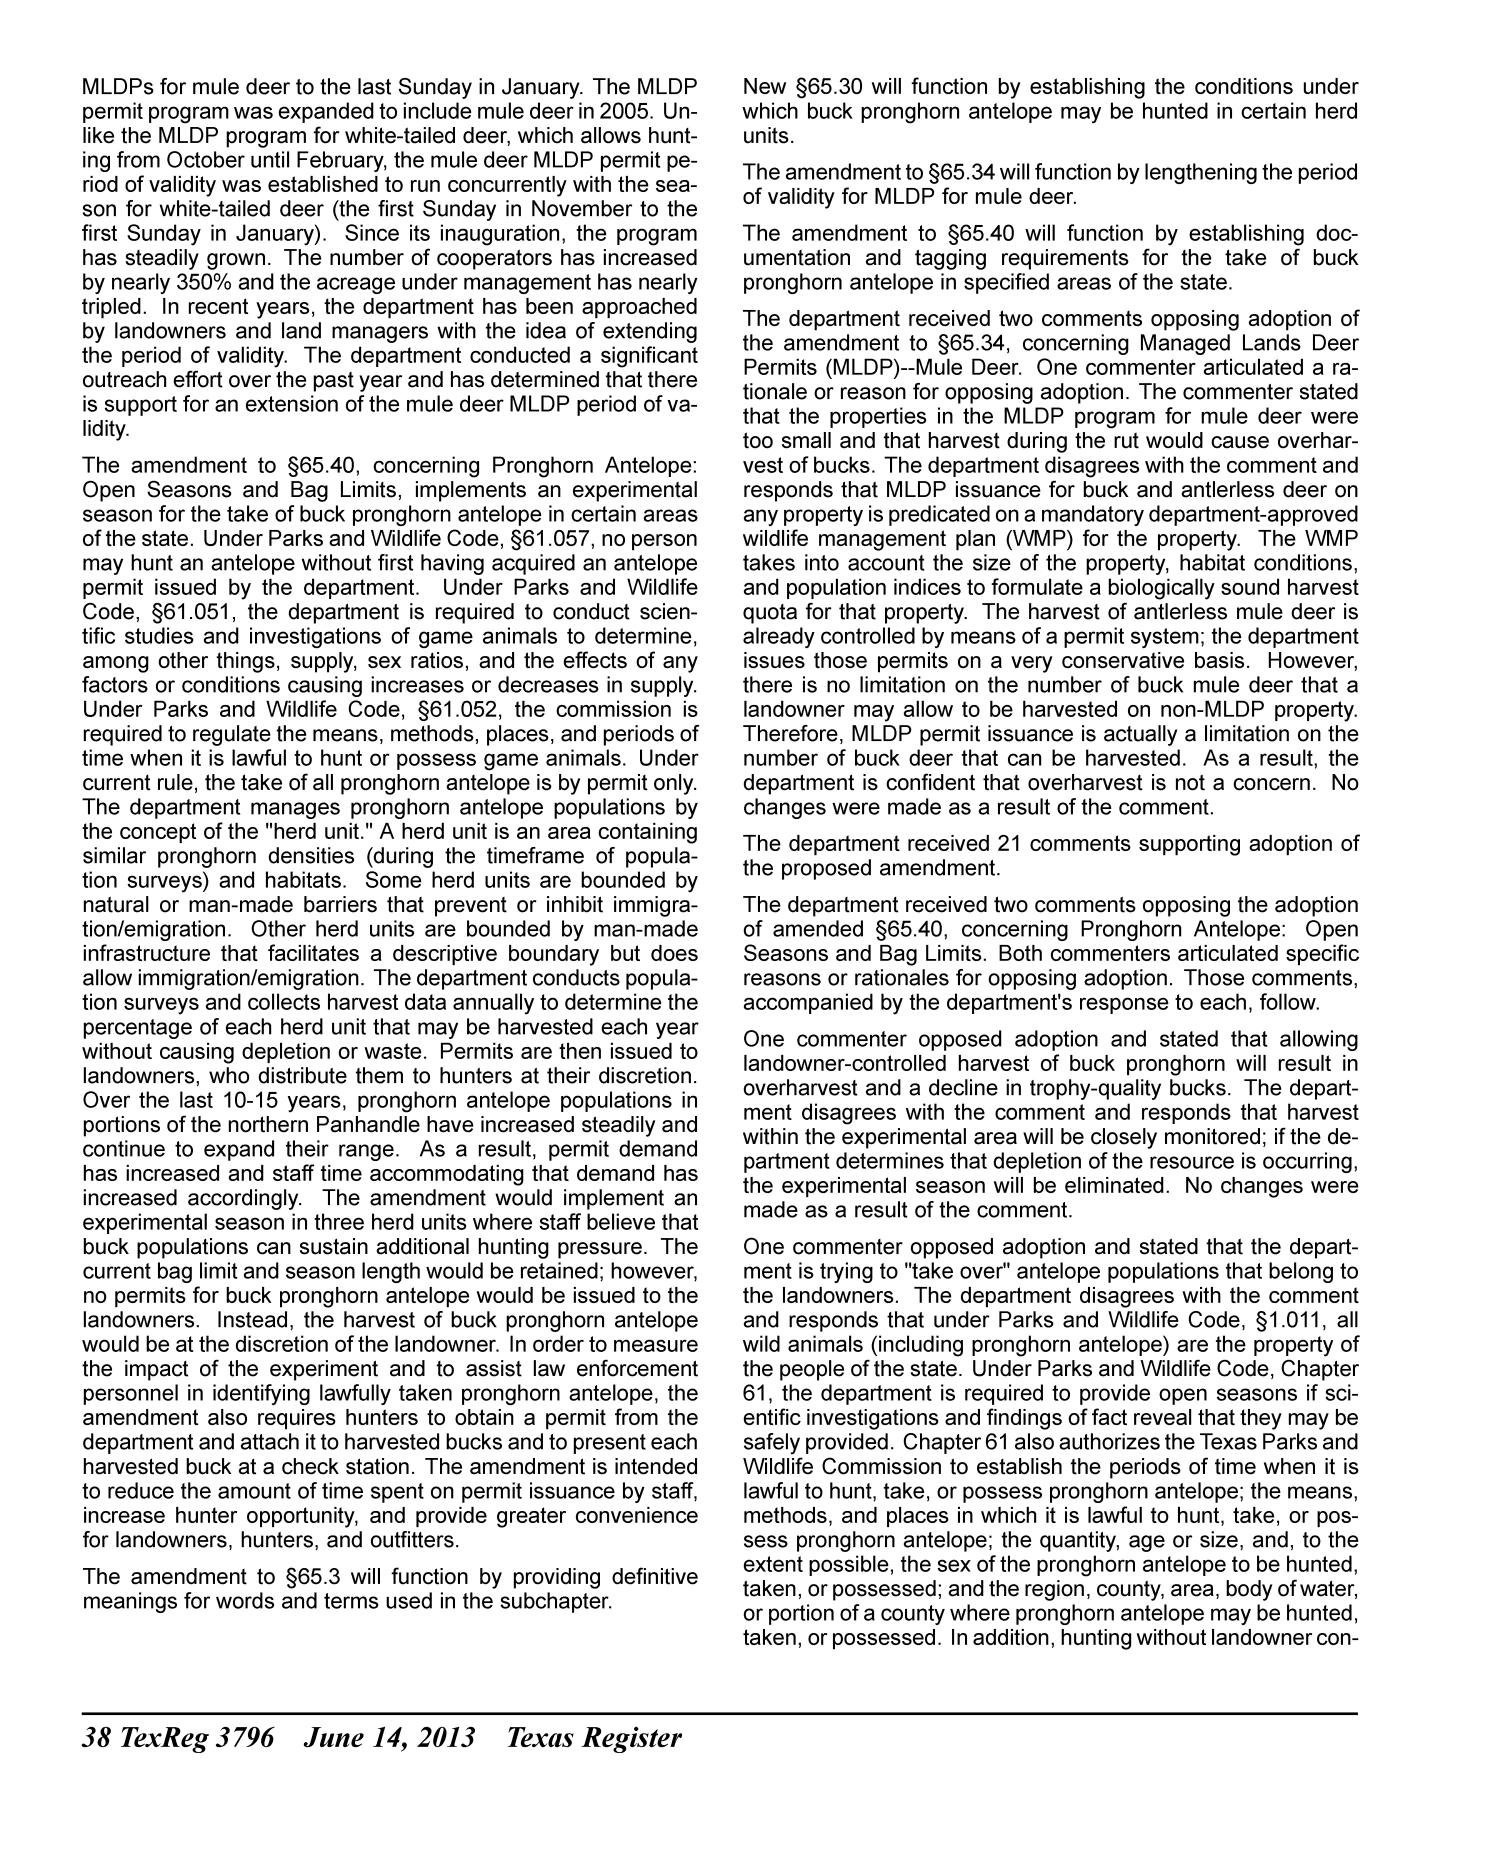 Texas Register, Volume 38, Number 24, Pages 3701-3856, June 14, 2013
                                                
                                                    3796
                                                